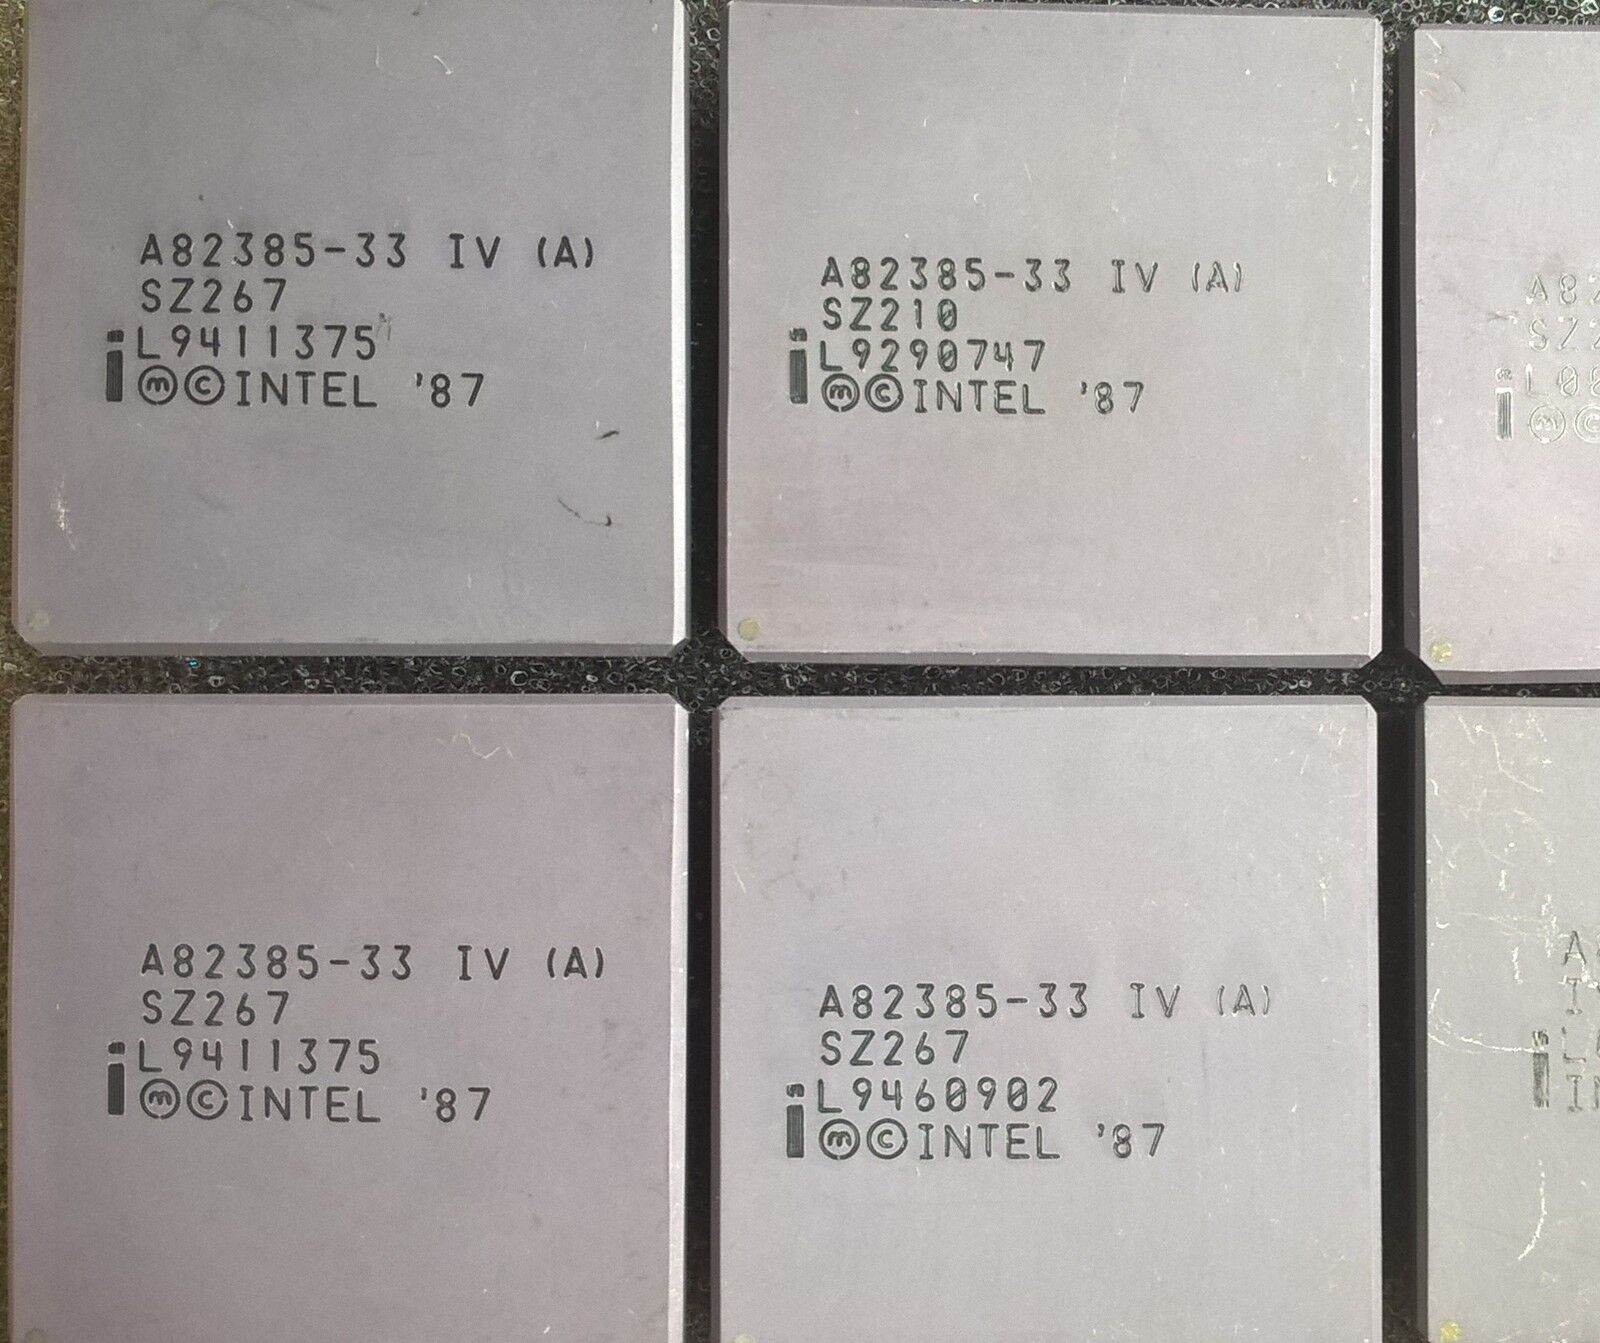 NOS CPU Intel 385 33MHz cache controller - for 386 / 486 IBM/Compaq +compatibles